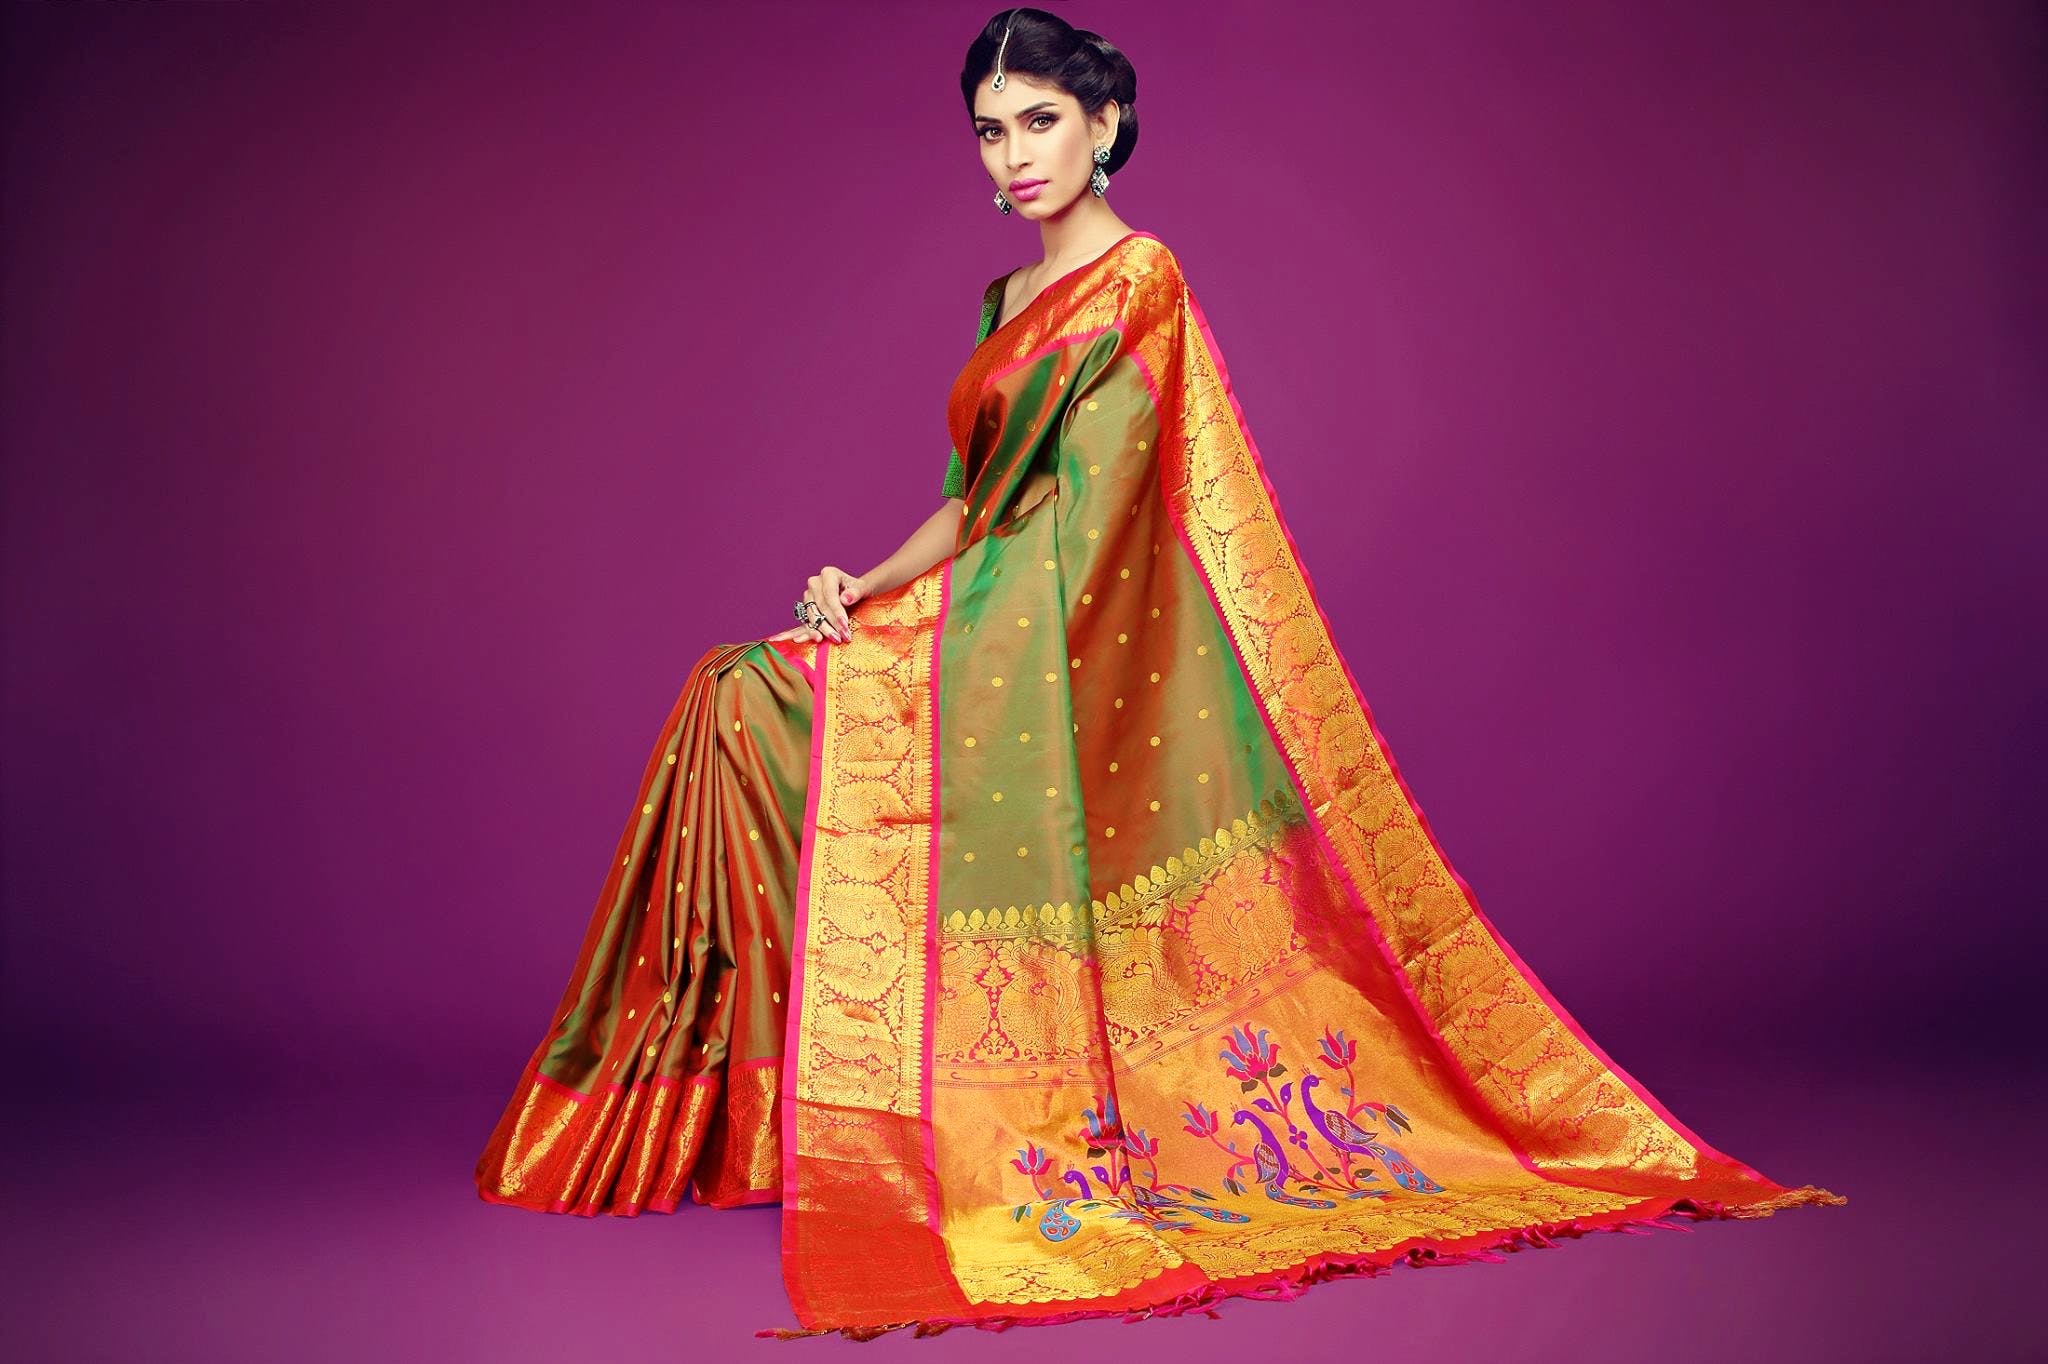 Clothing,Orange,Yellow,Sari,Formal wear,Fashion model,Silk,Purple,Magenta,Textile